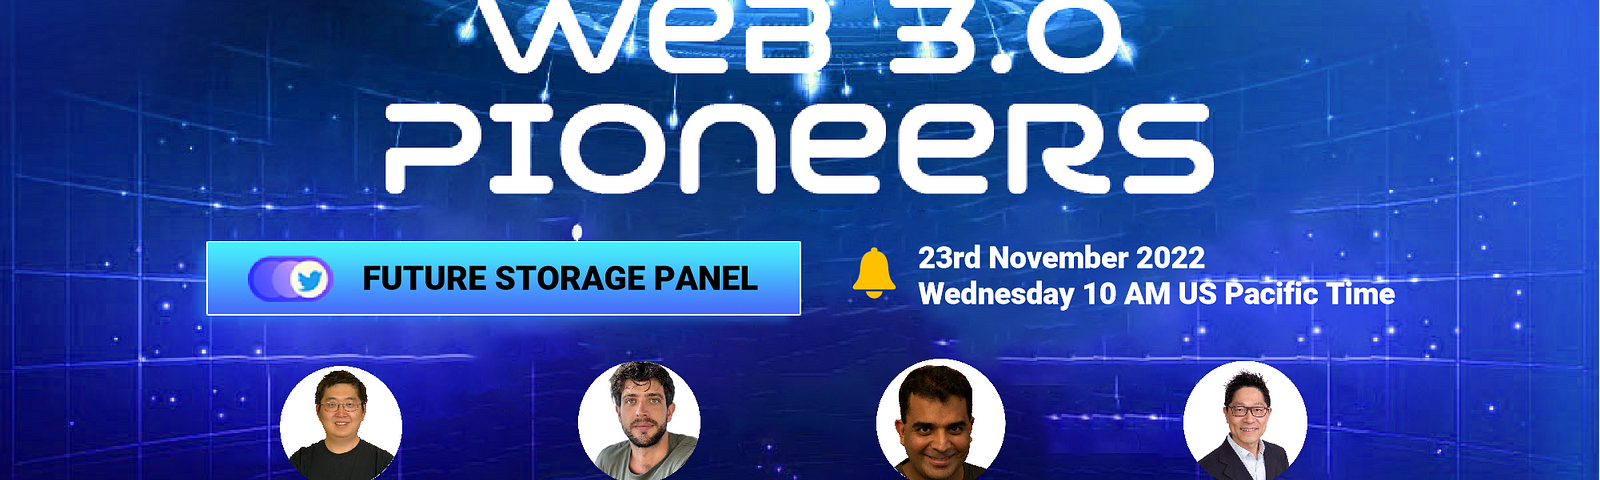 Web 3.0 Pioneers — Future Storage Panel